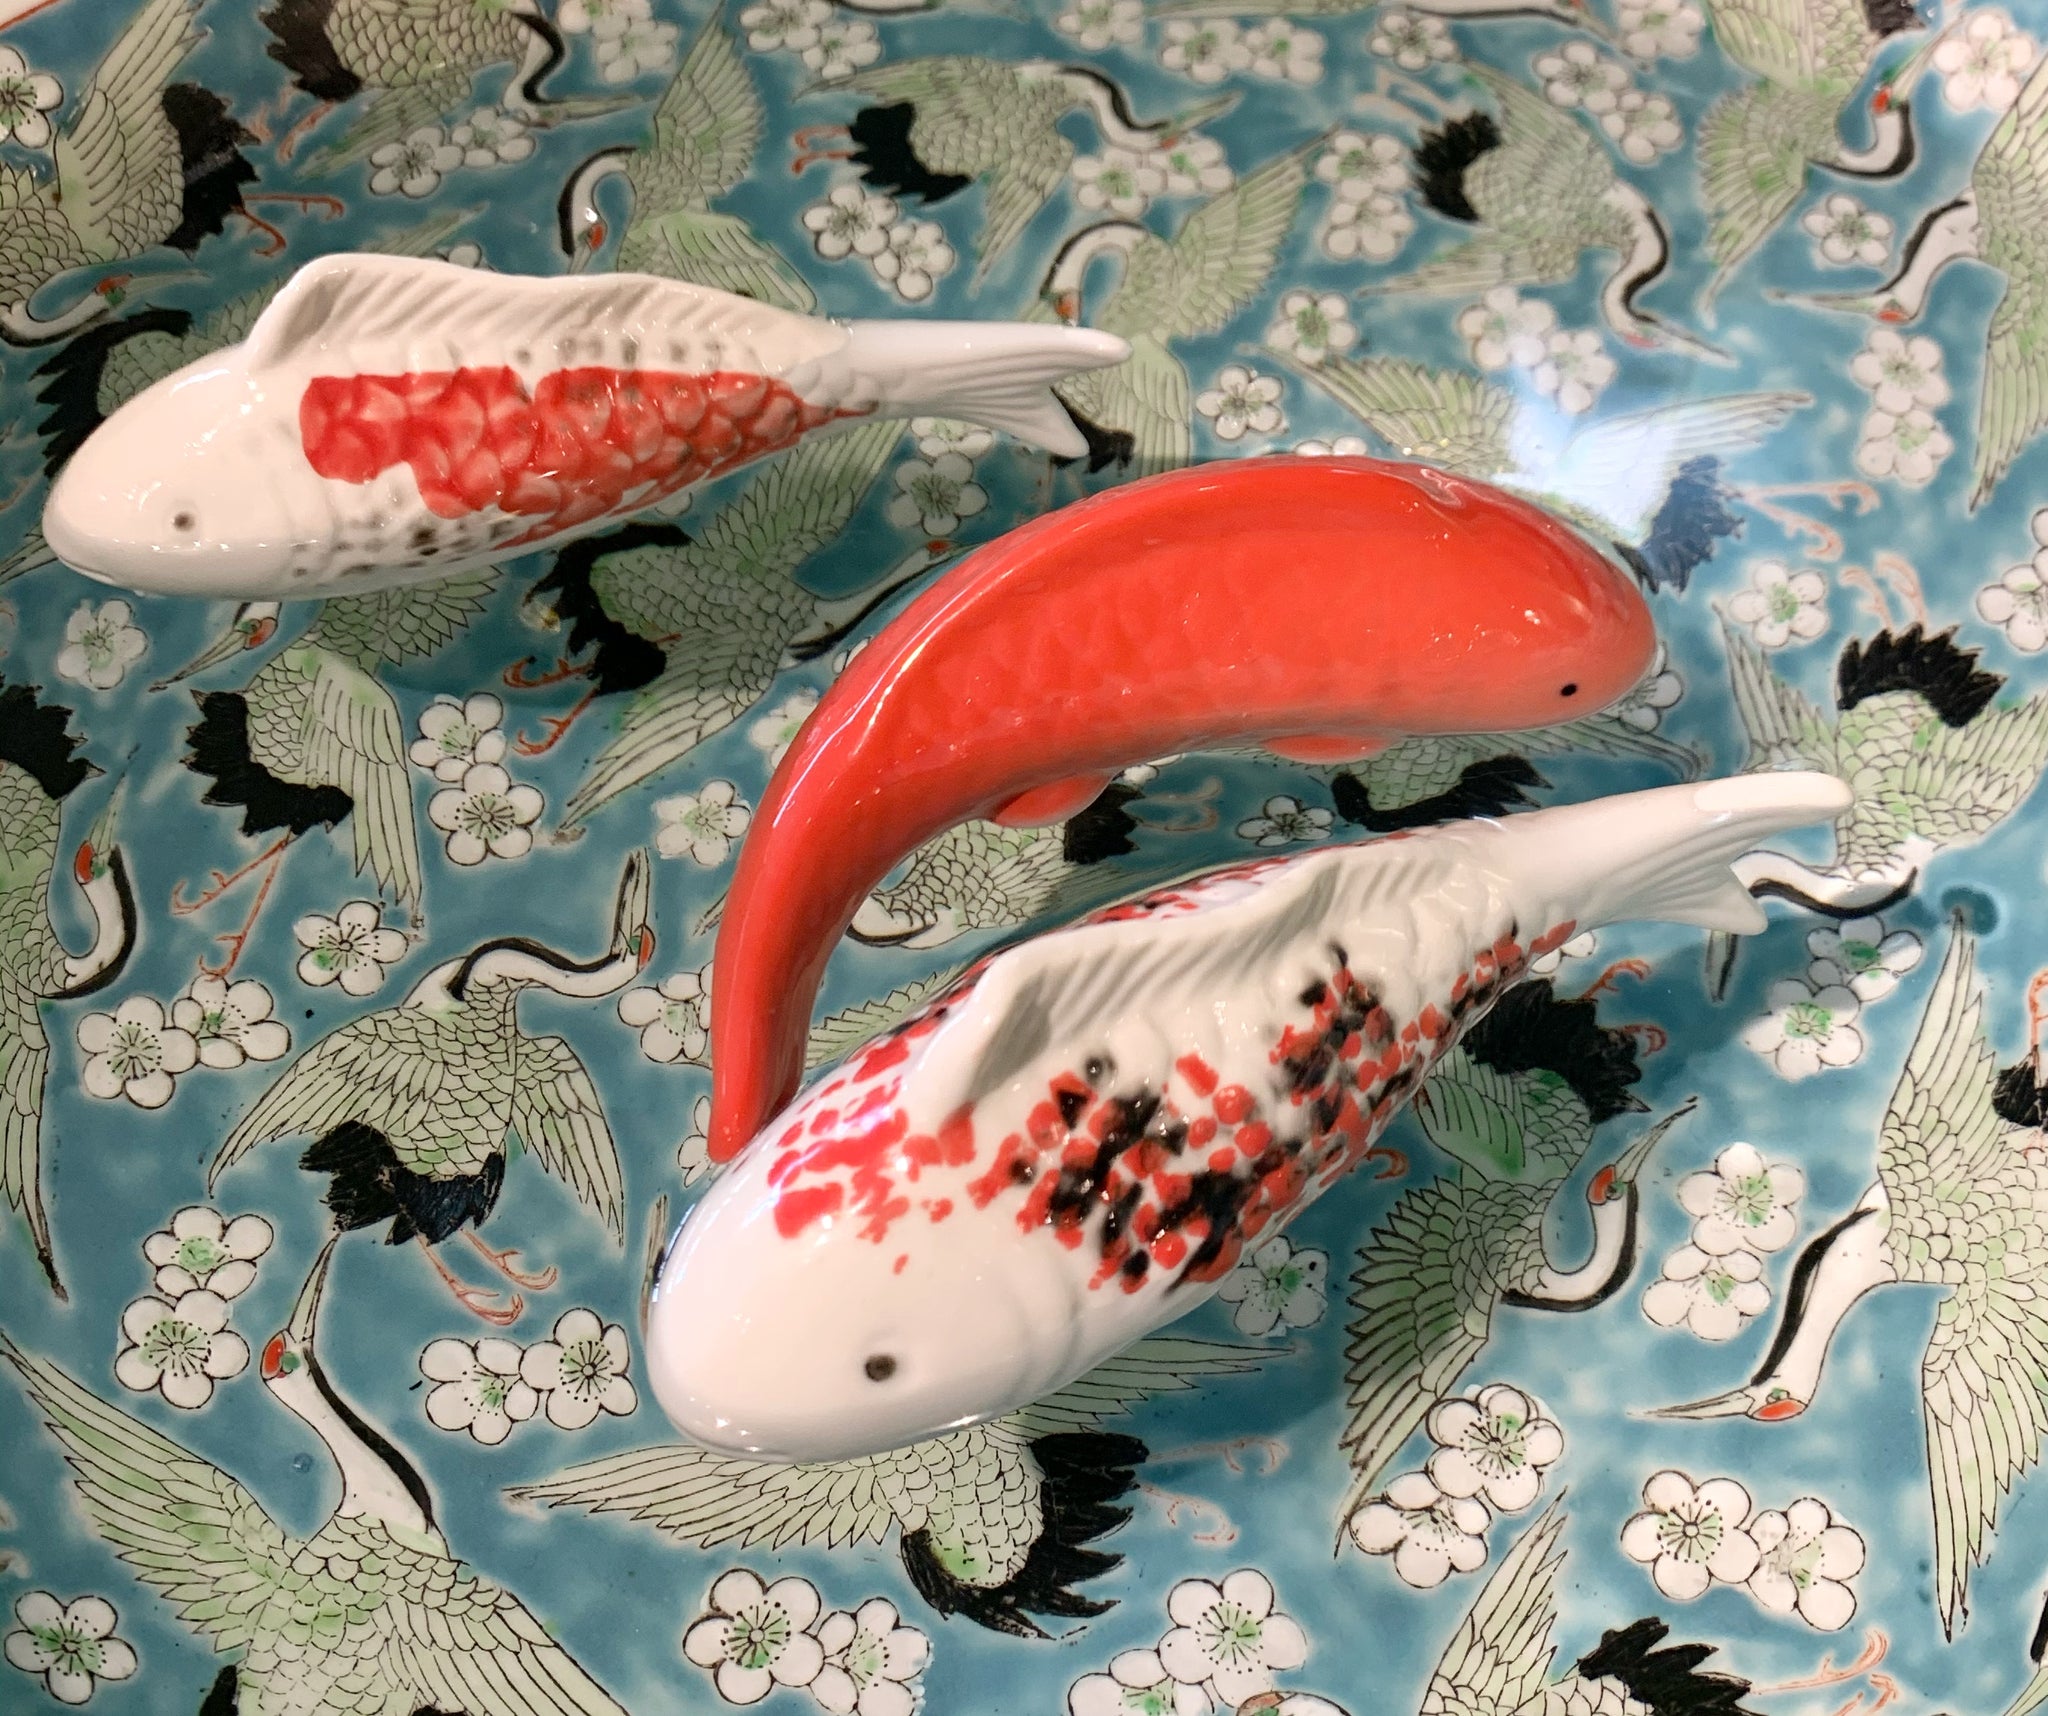 Ceramic Koi Fish